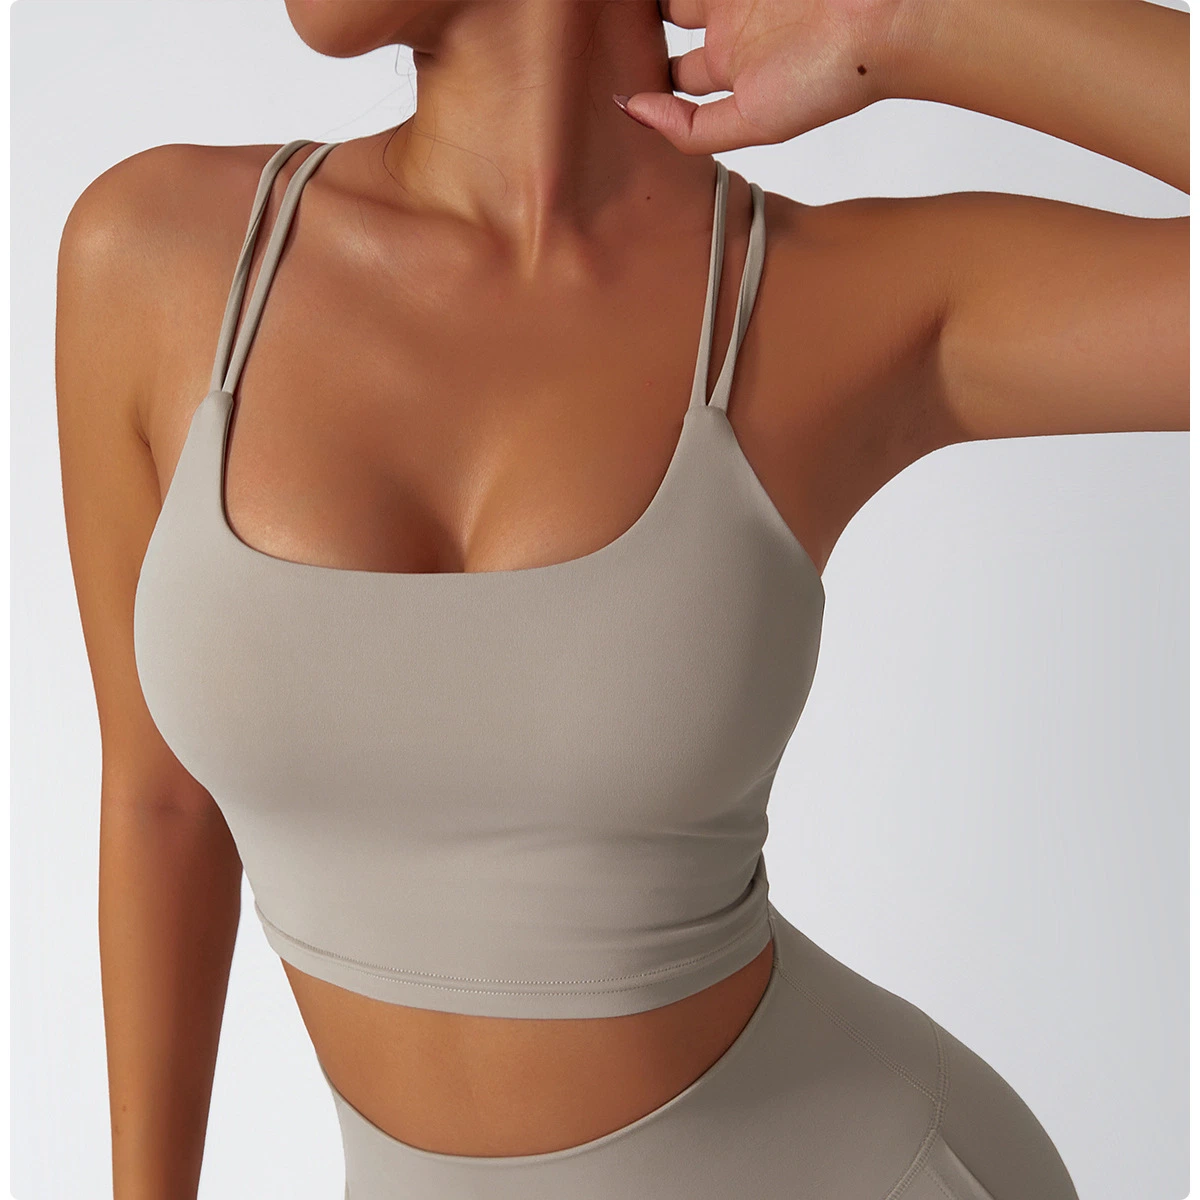 Recycled Fabric Nylon Top Women Bra Sexy Top Woman Breathable Underwear Women Fitness Yoga Sports Bra for Women Gym Wear